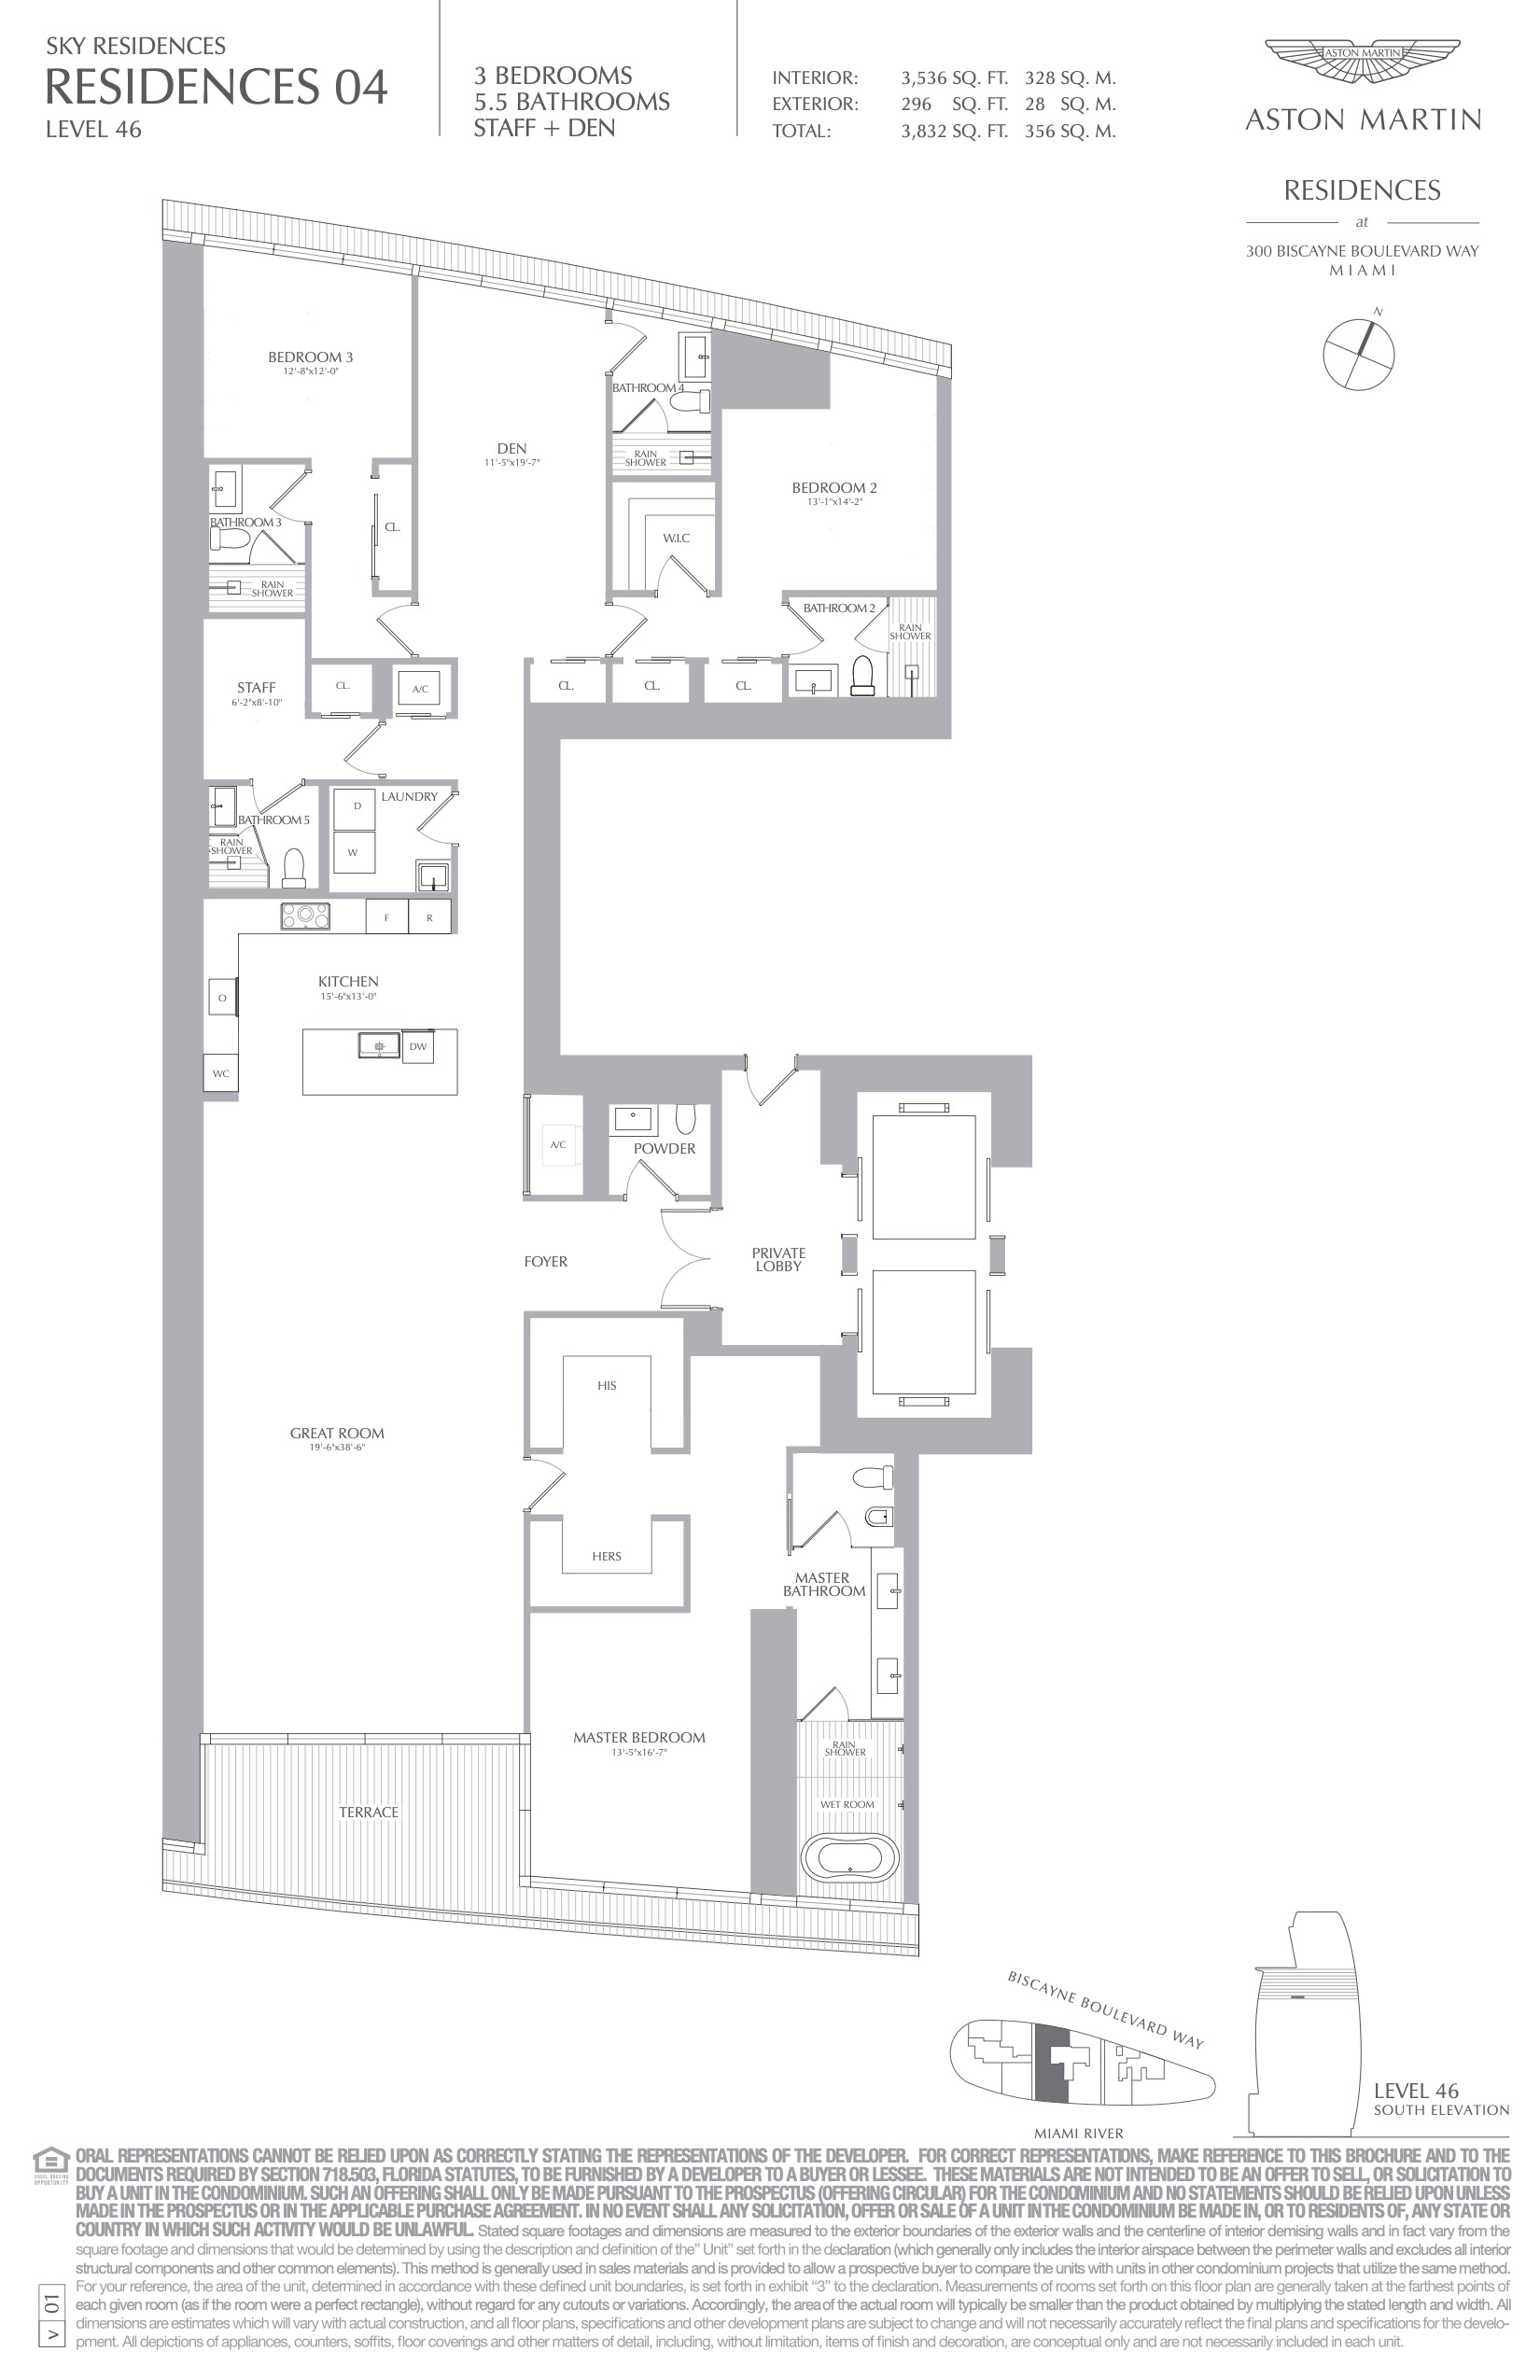 Residence 04 - Level 46